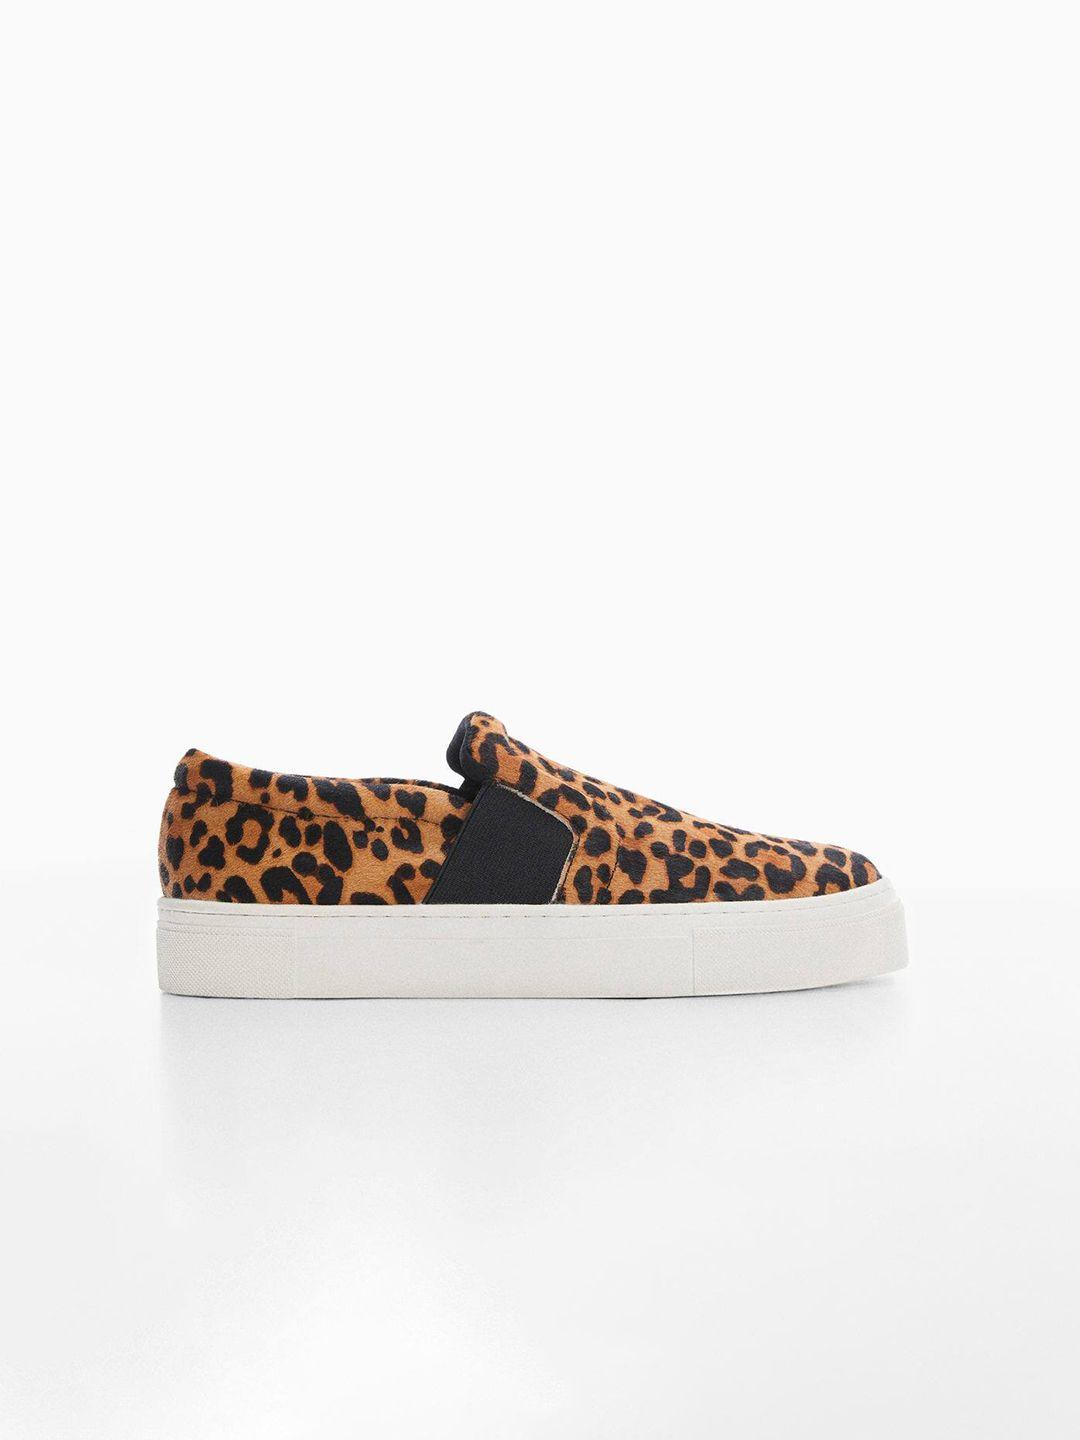 mango women leopard printed slip on sneakers